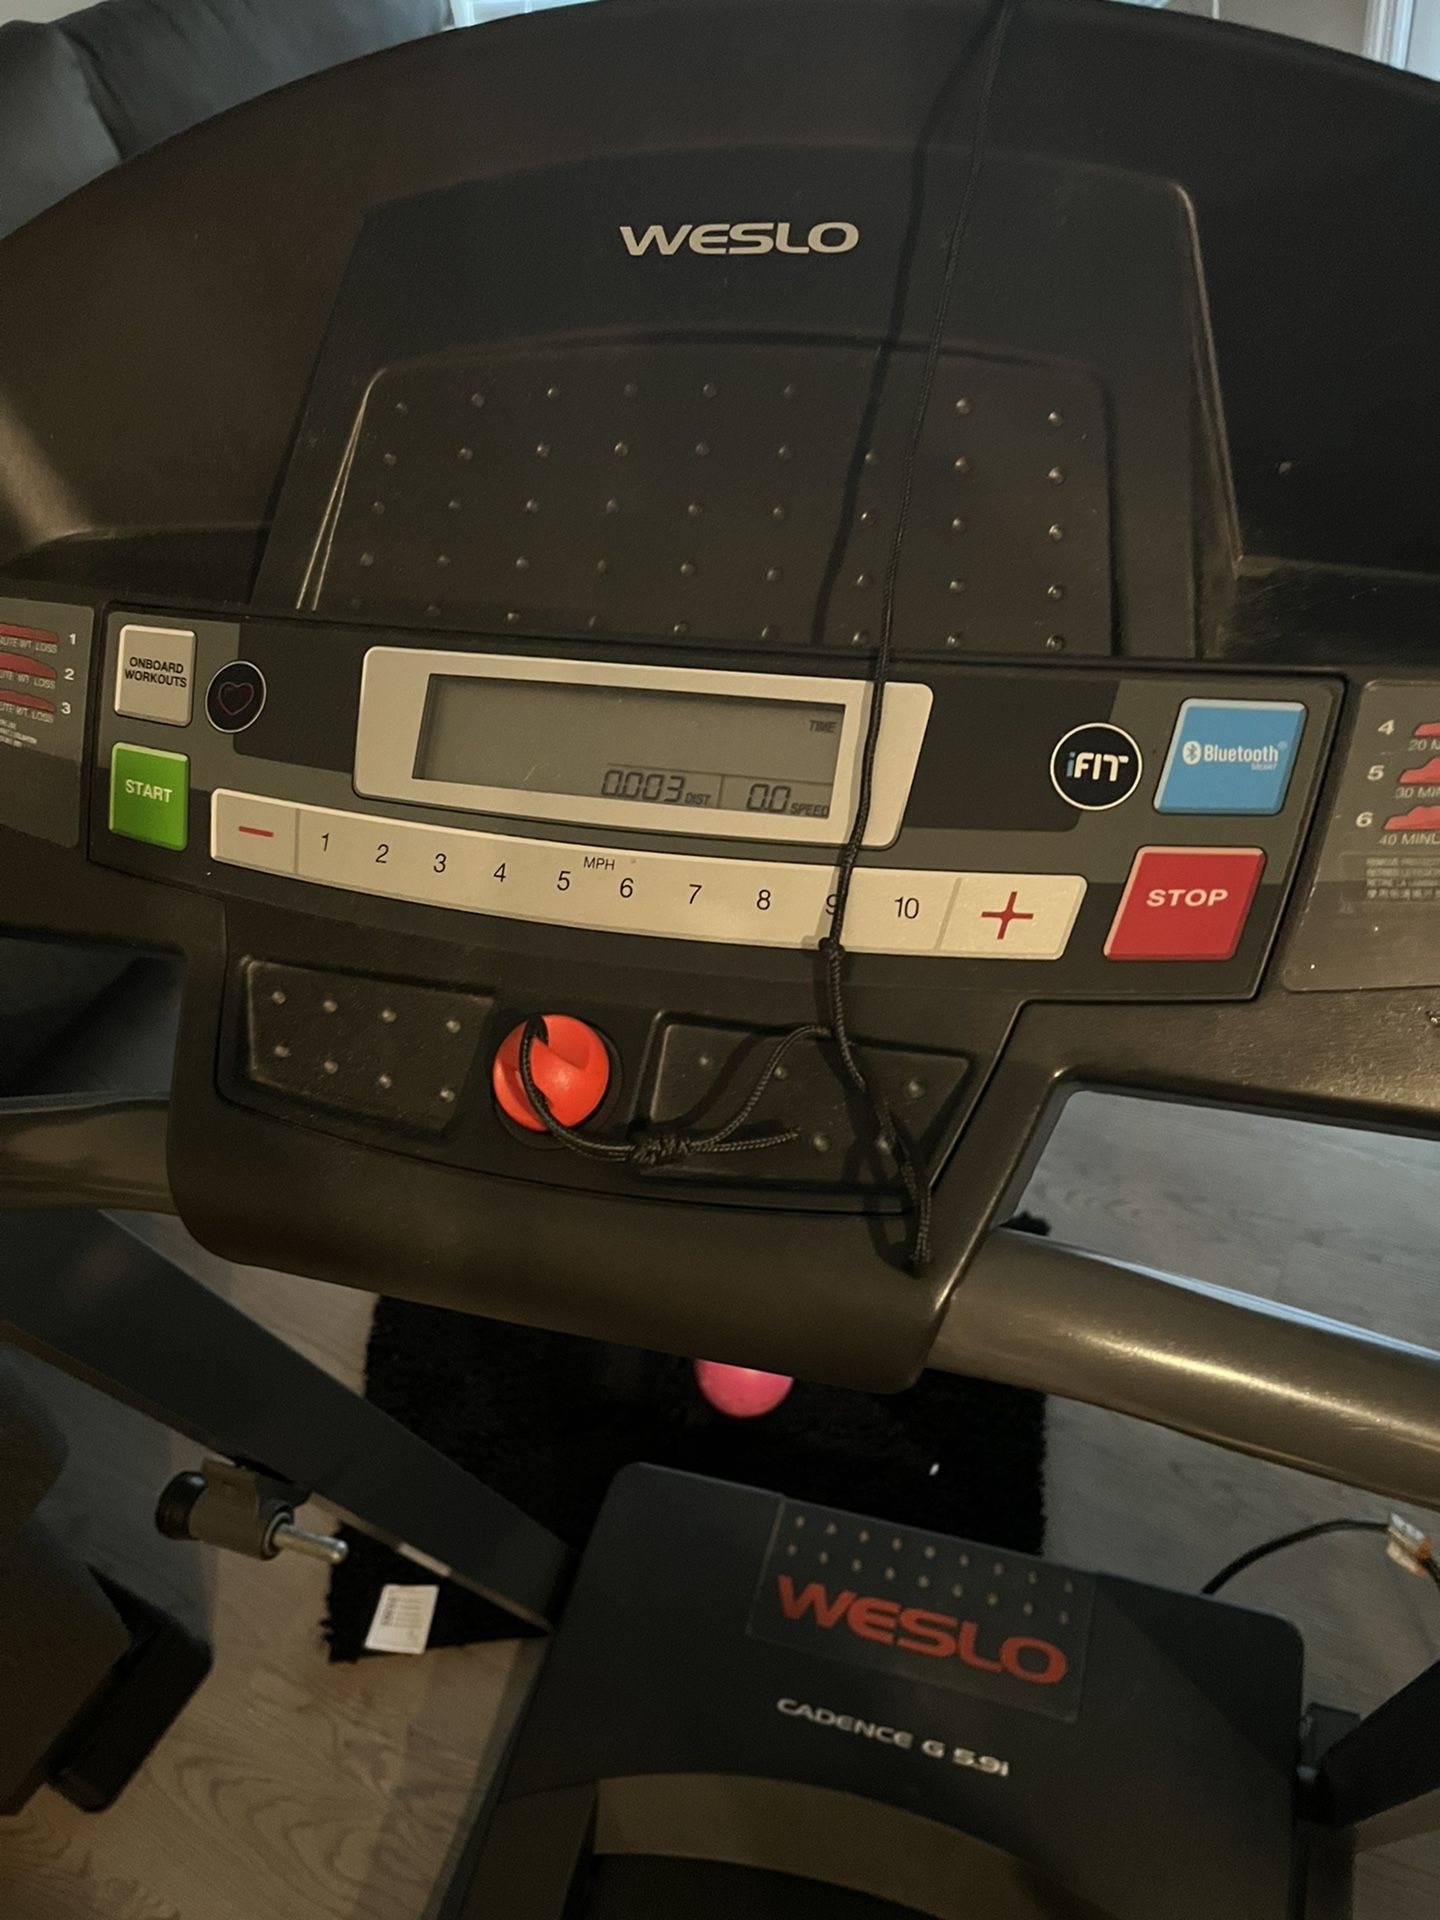 Wedlo Treadmill 